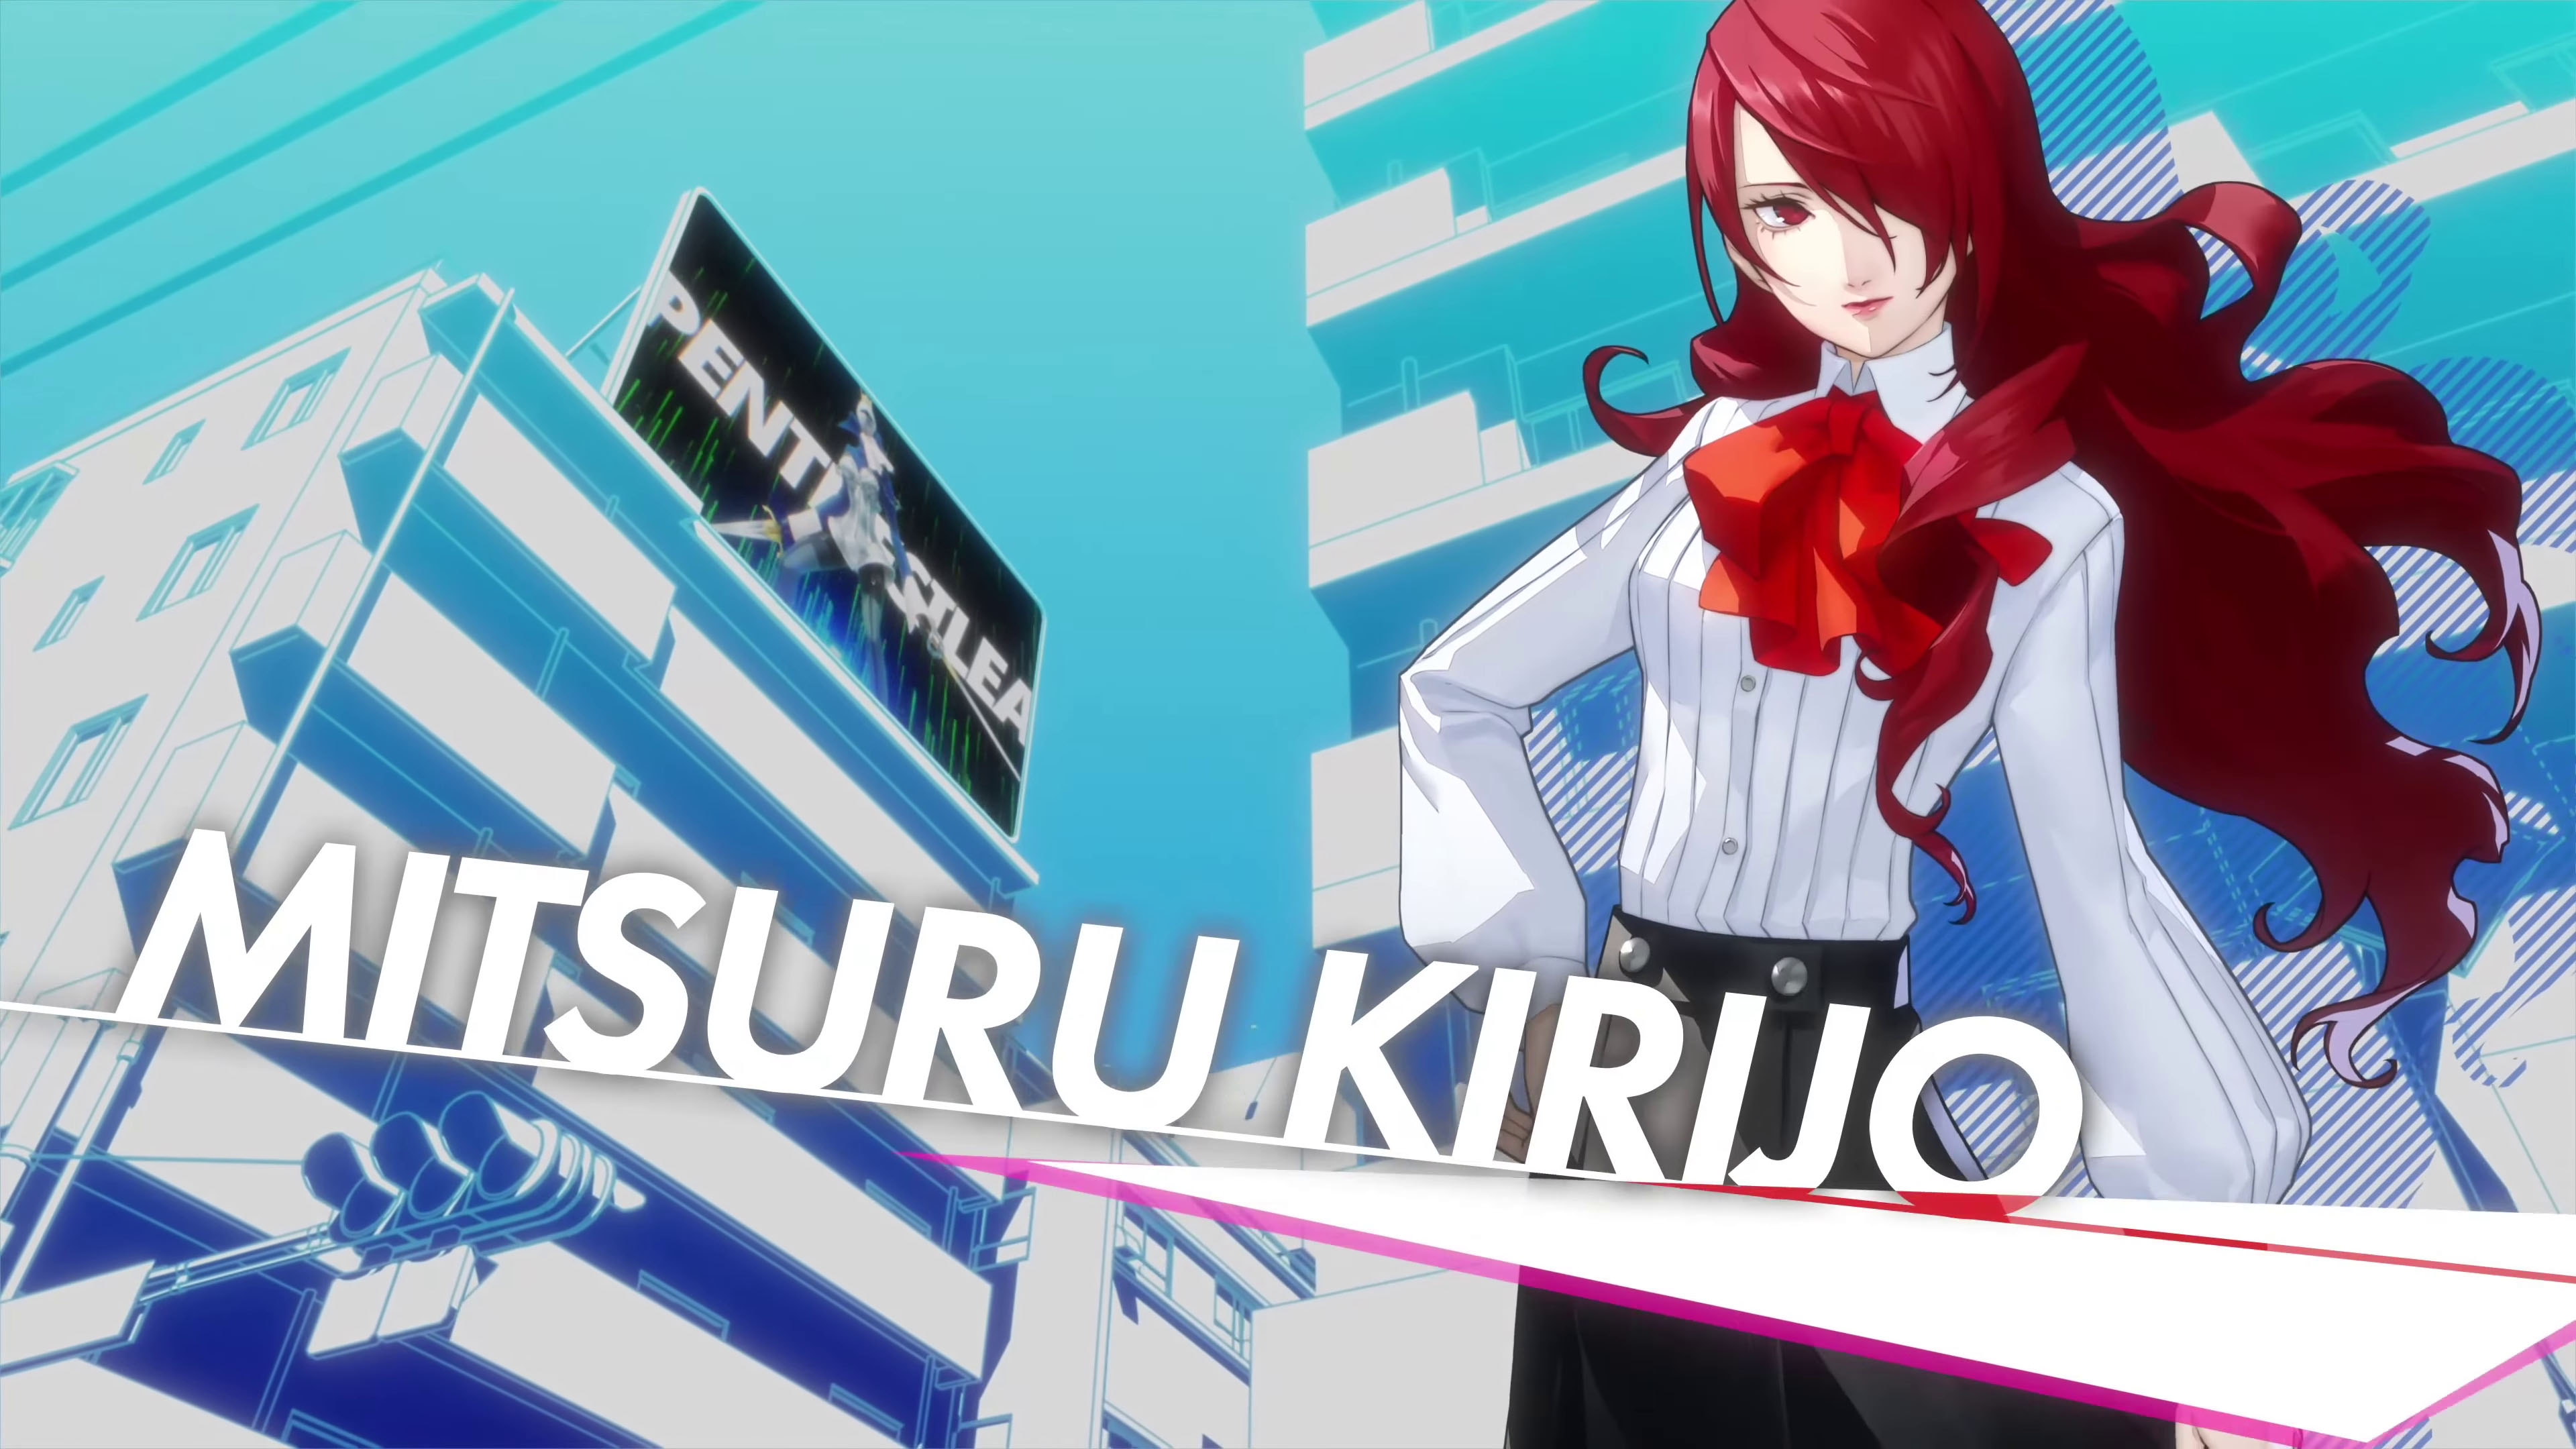 The new trailer for Persona 3 Reload shows off Mitsuru Kirijo